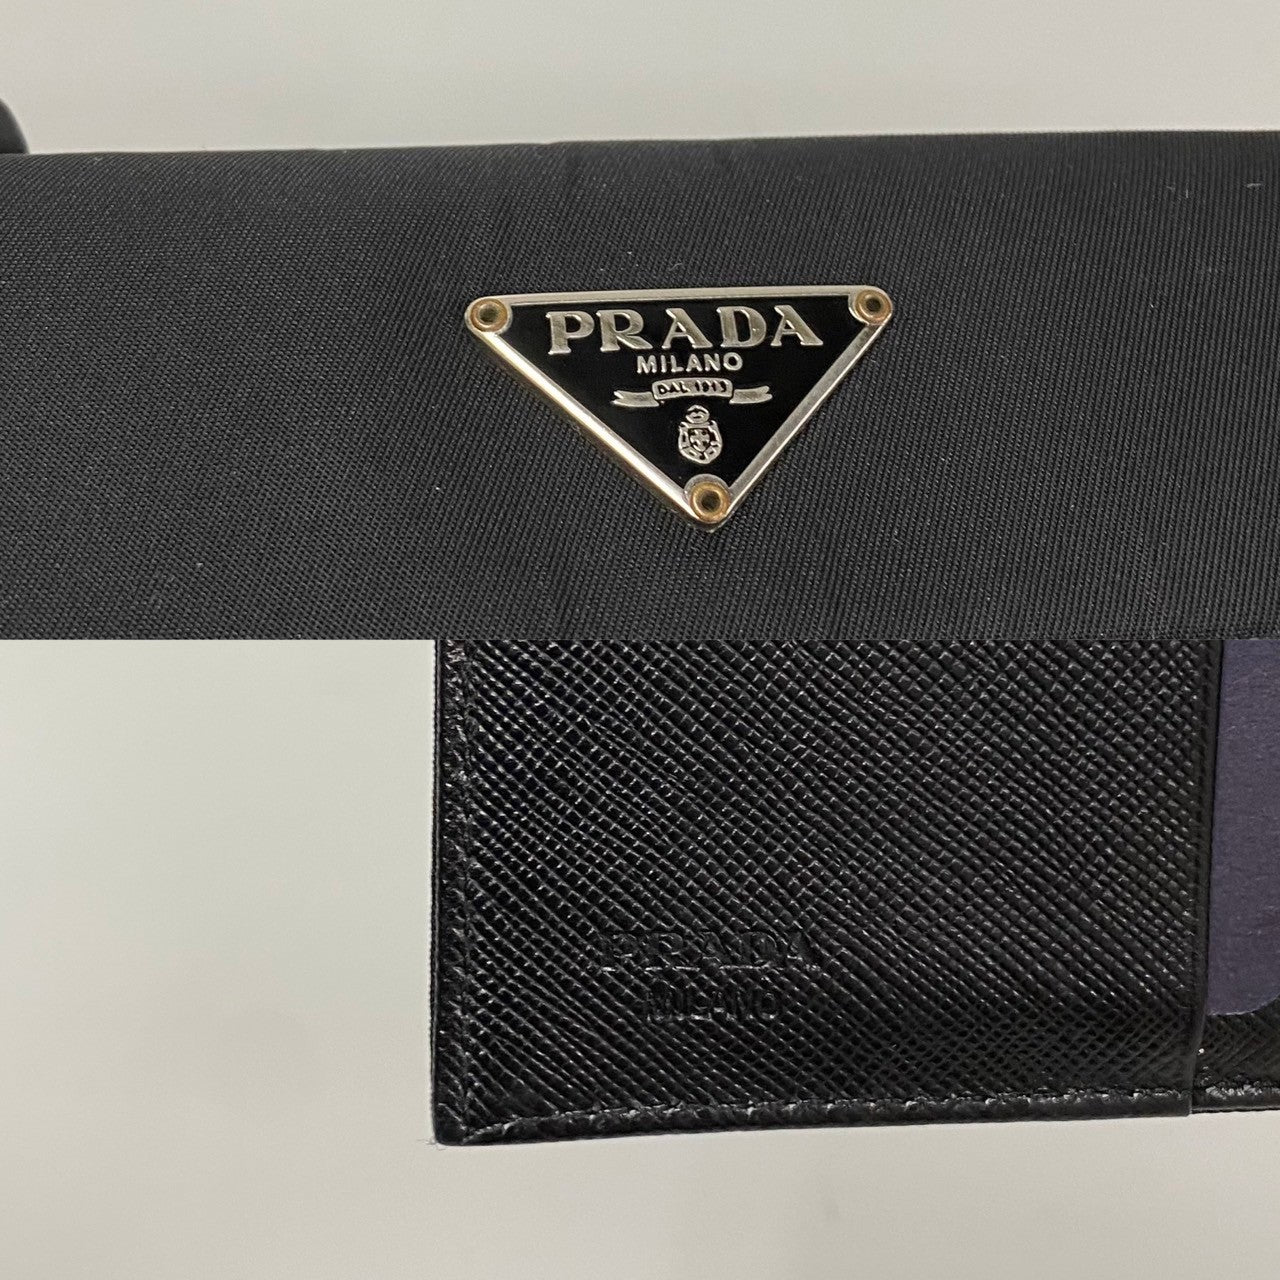 Prada Tessuto Compact Wallet  Canvas Short Wallet in Good condition